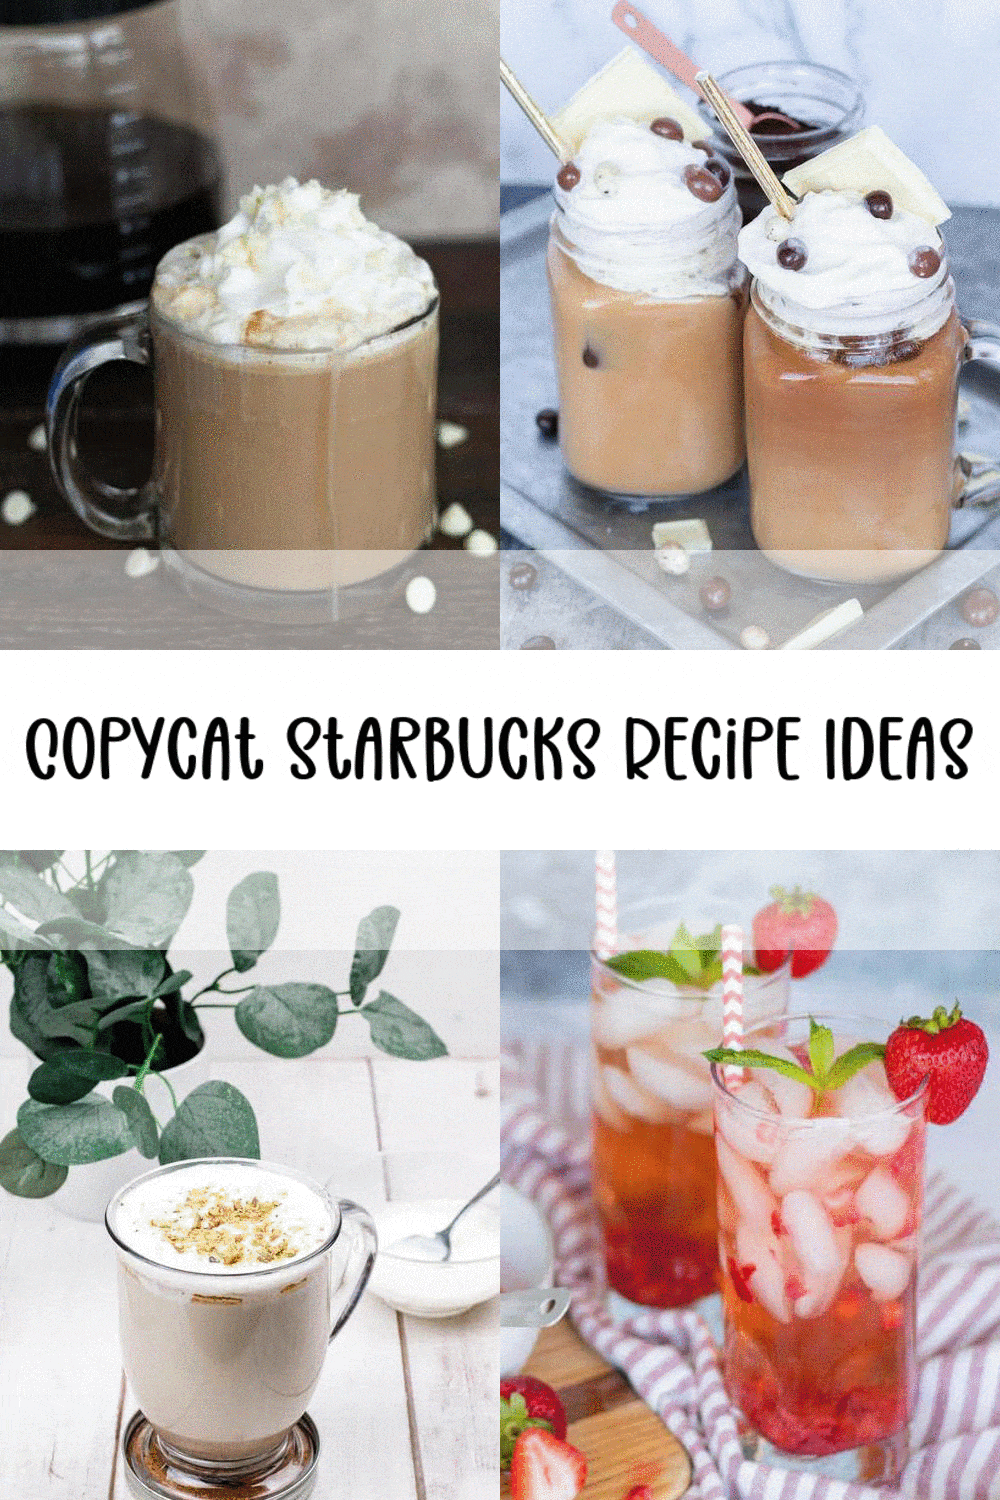 6 Copycat Starbucks Recipes - Best Copycat Starbucks Ideas